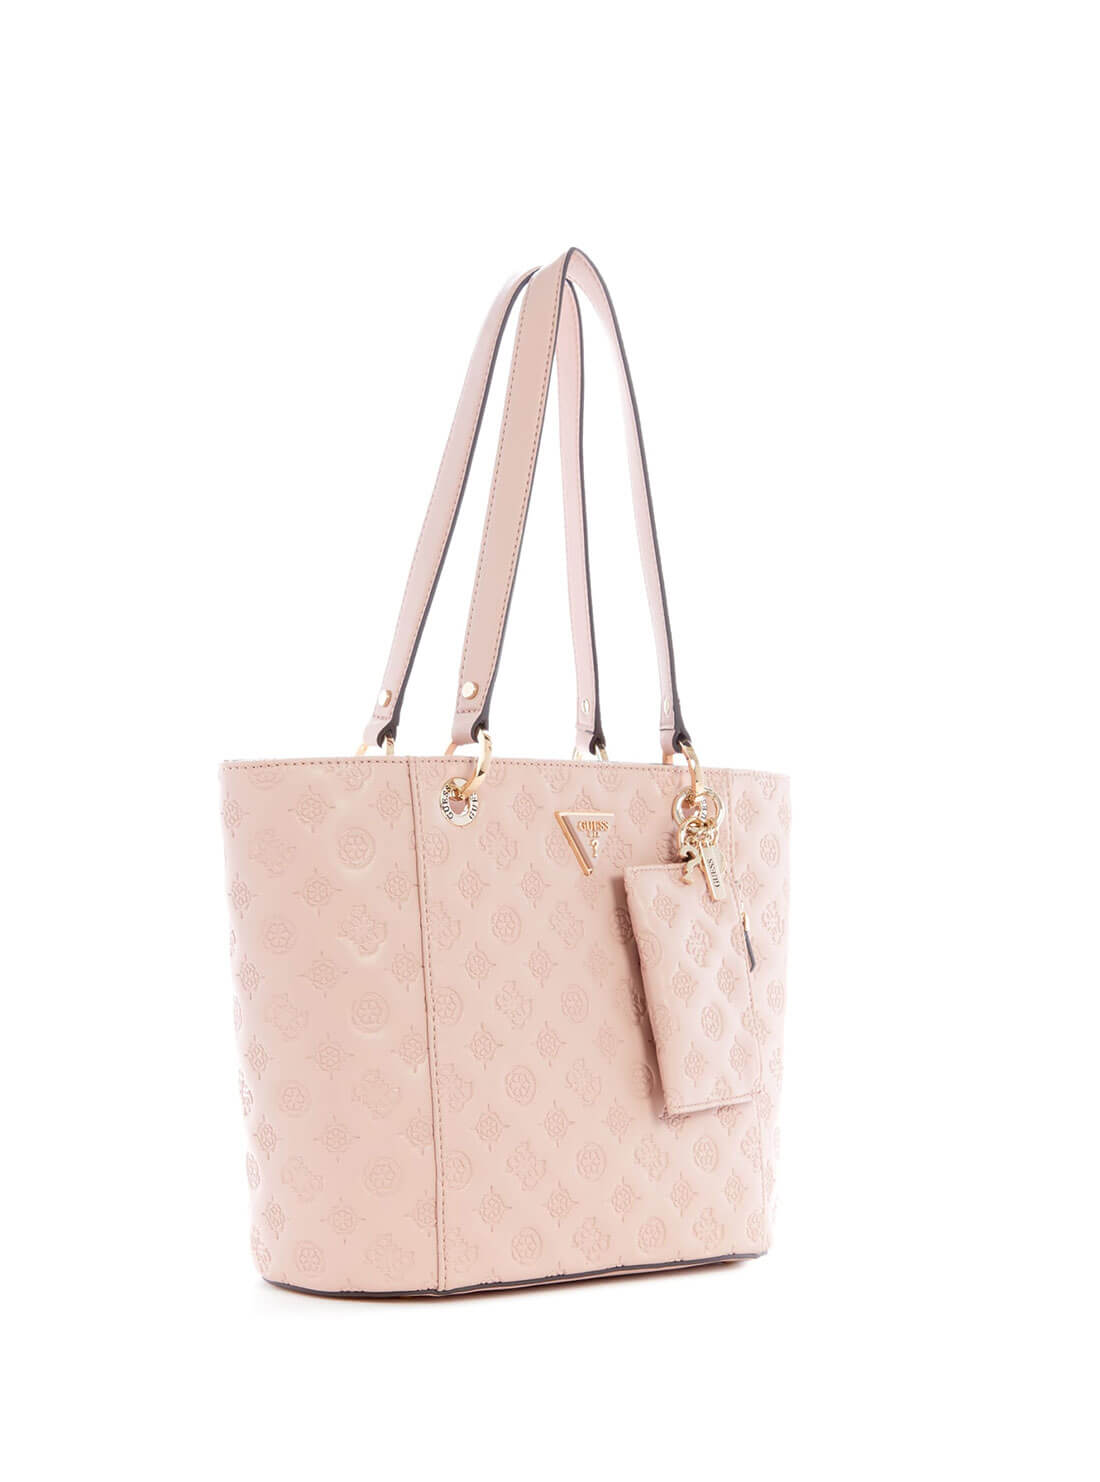 Light Pink Noelle La Femme Small Tote Bag | GUESS Women's Handbags | side view